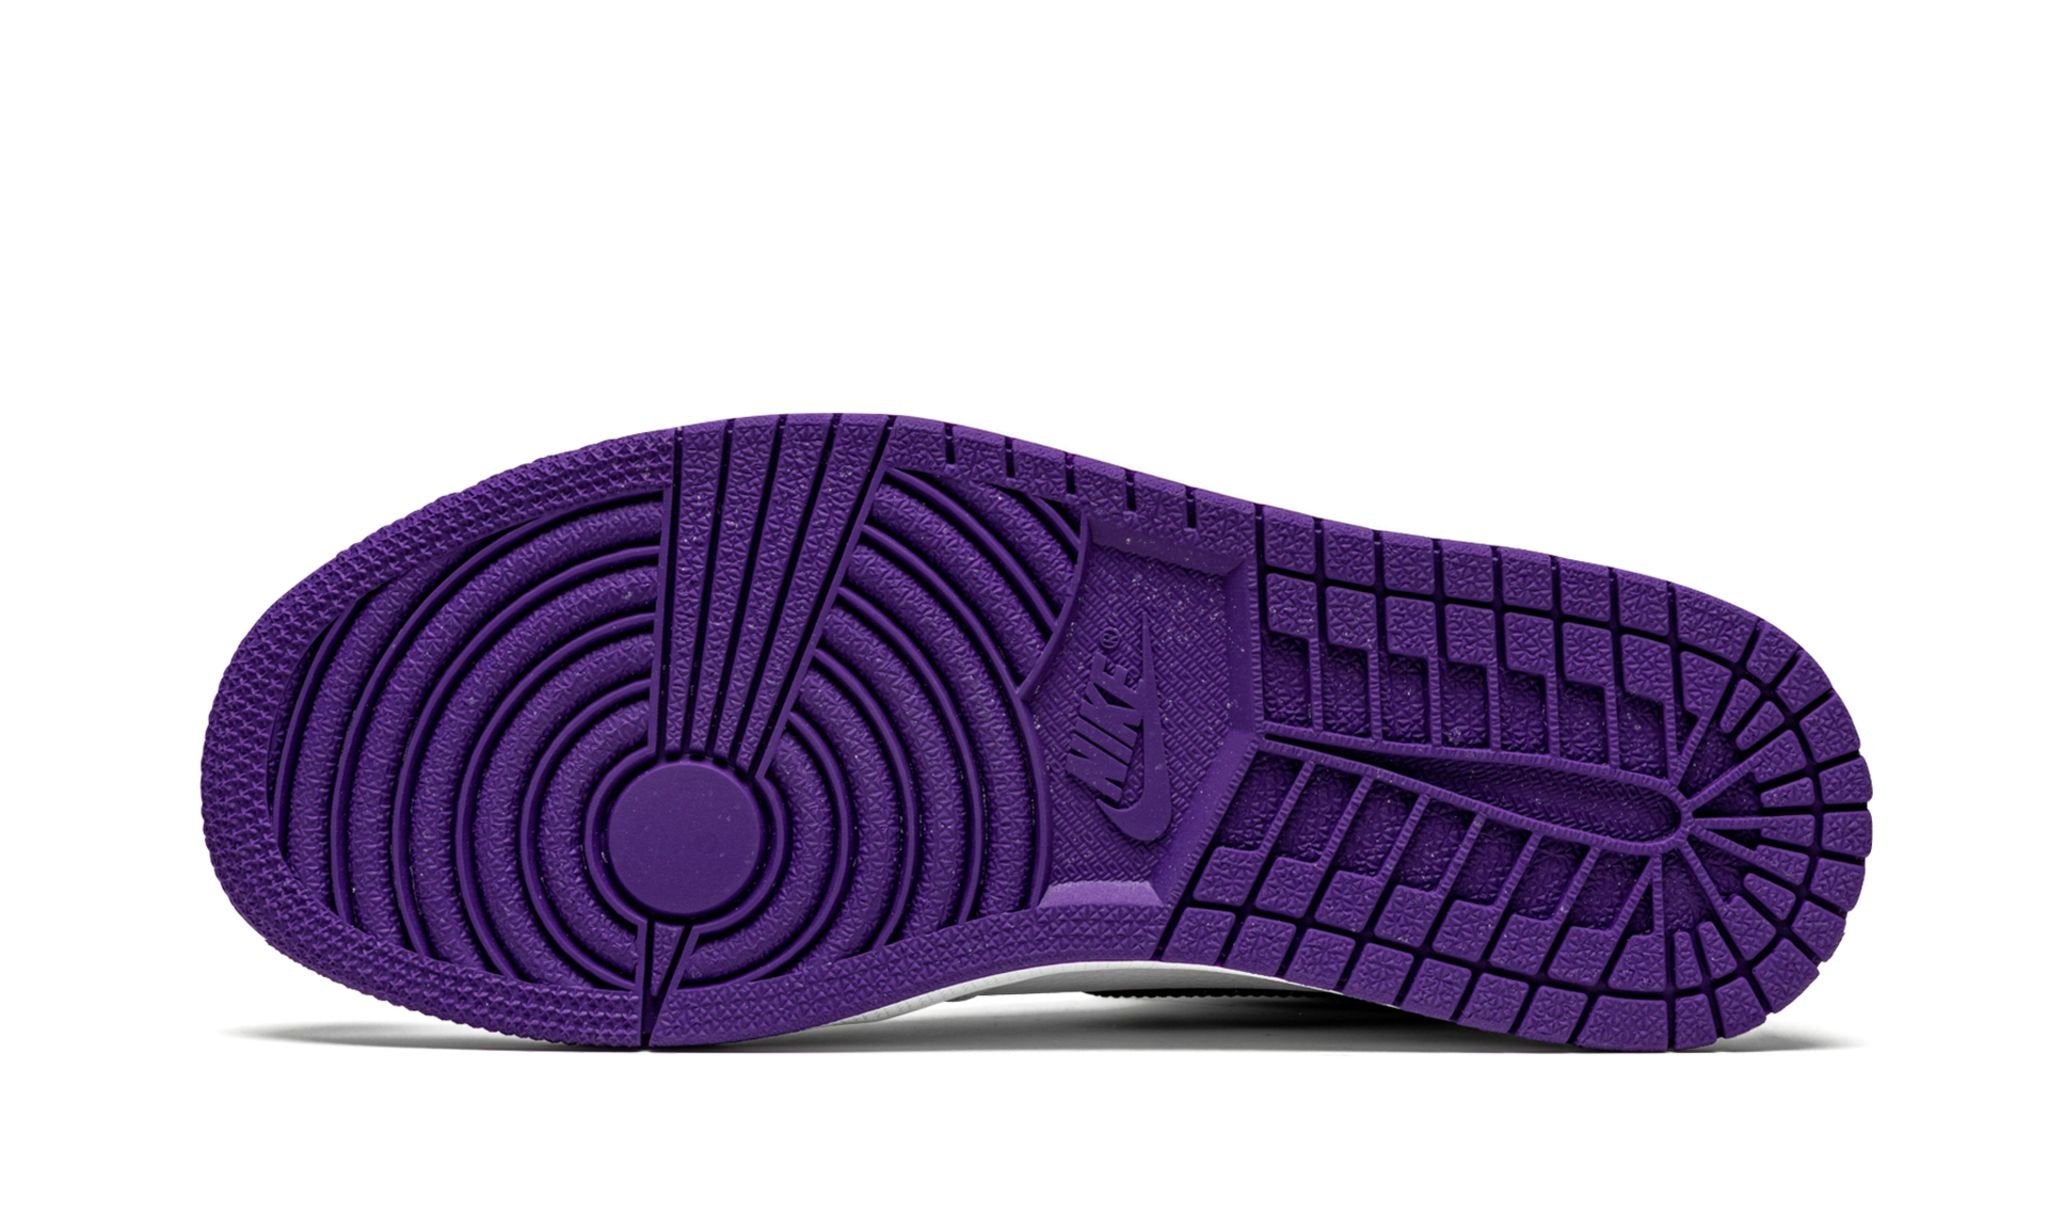 Nike Air Jordan 1 Retro High Court Purple (W)